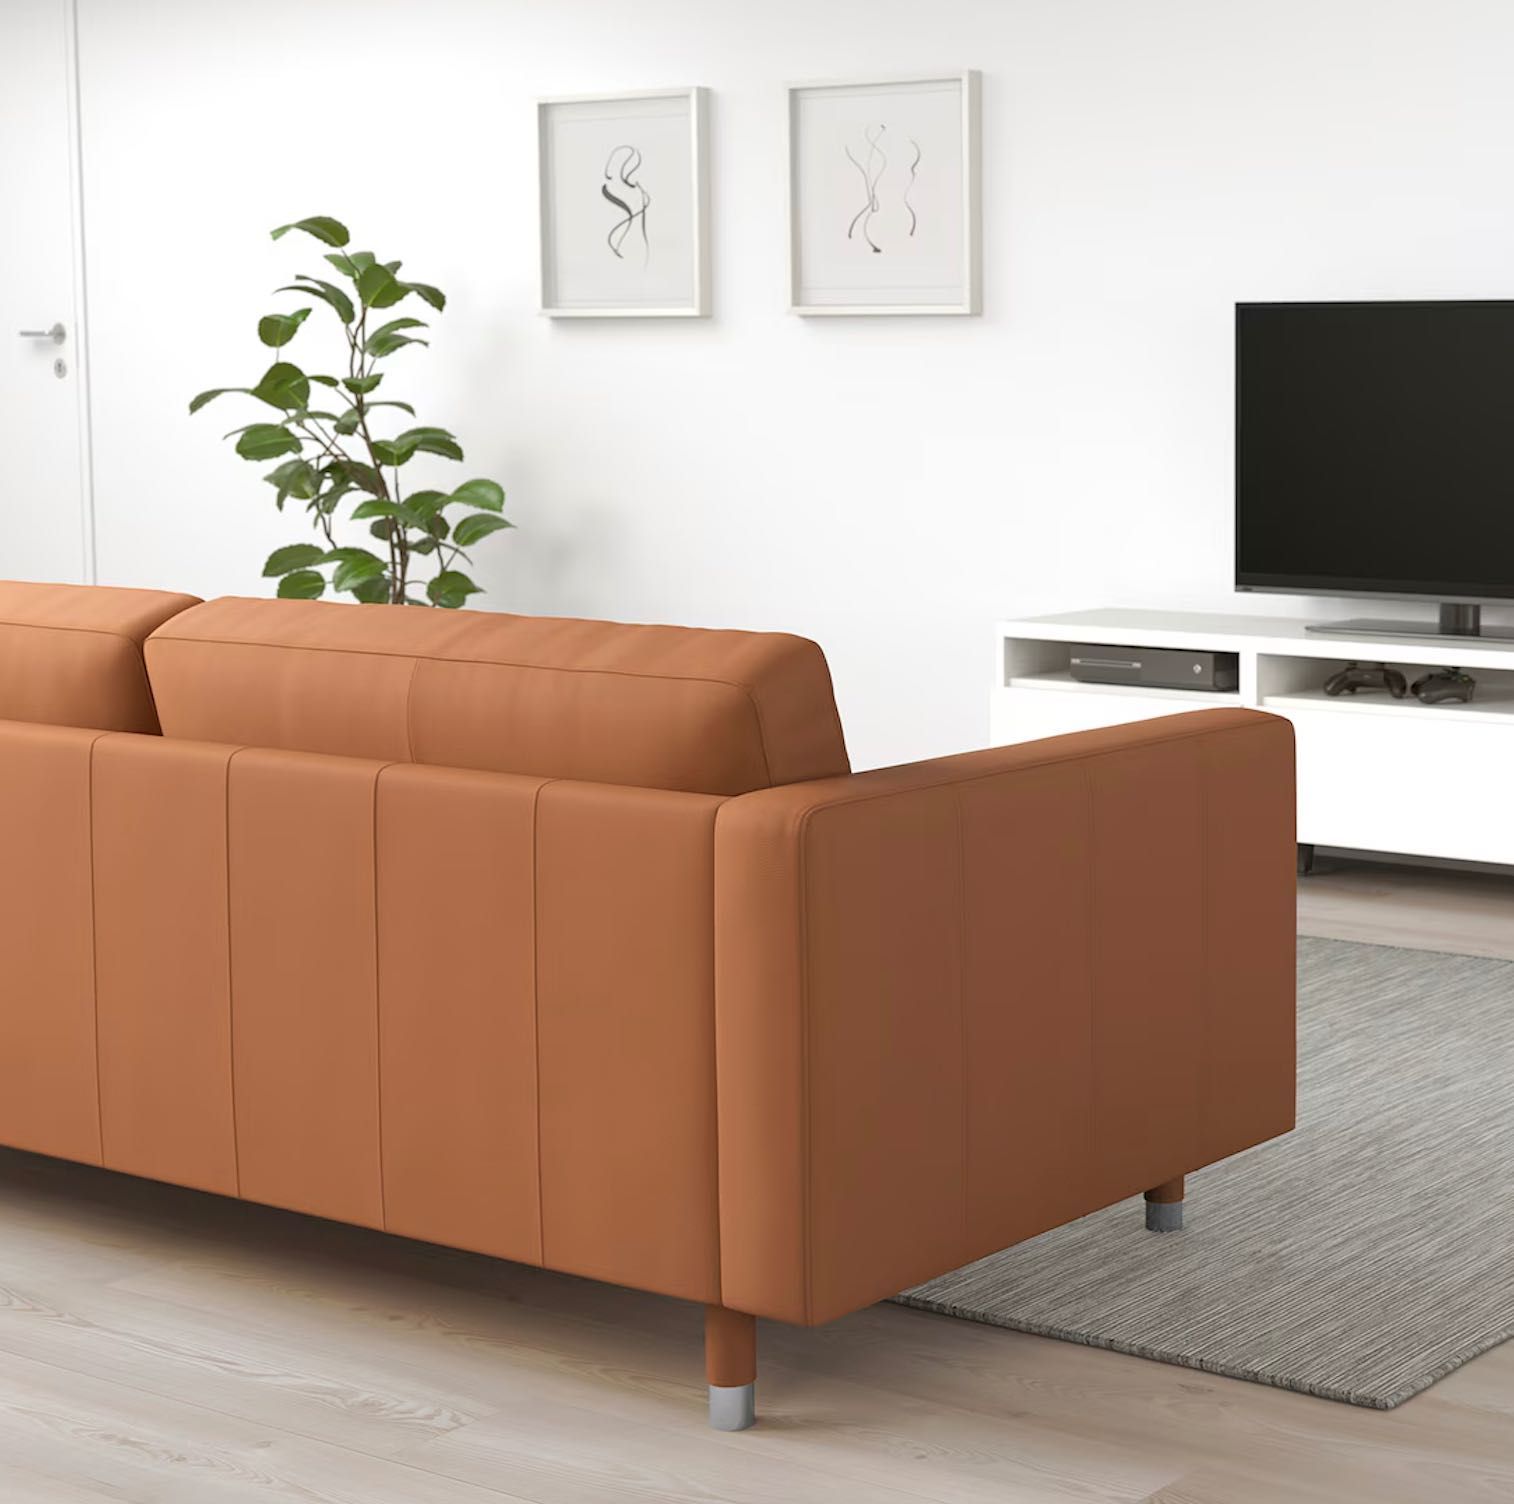 kanapa sofa 2-osobowa LANDSKRONA, Średnio twarda.